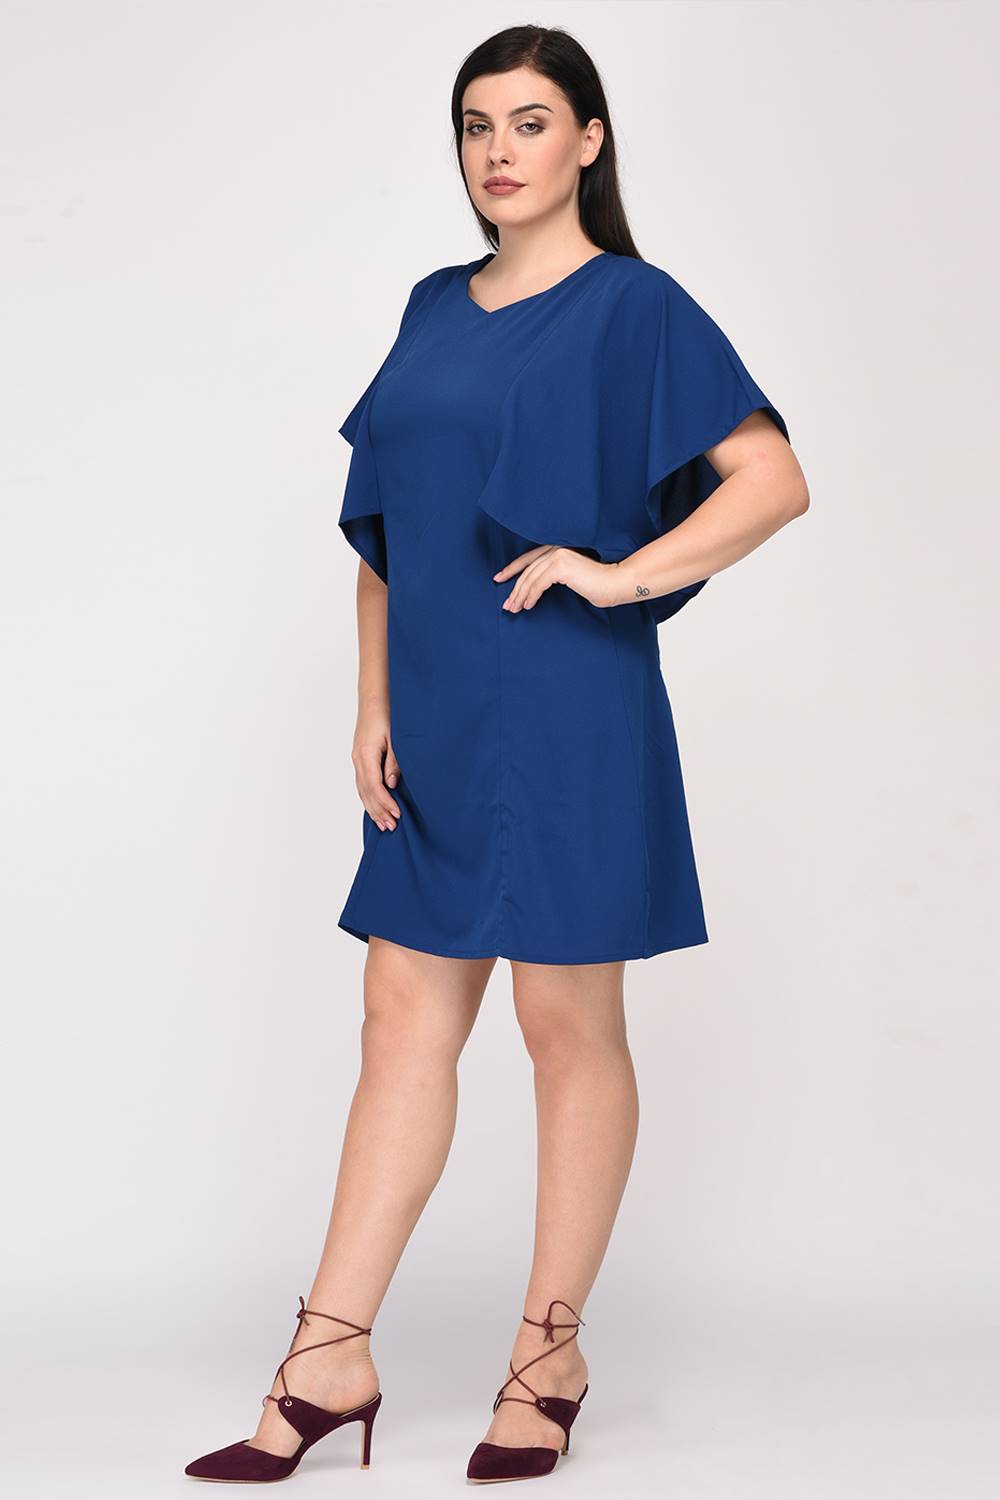 LASTINCH Blue Kaftan Dress size available upto 8XL